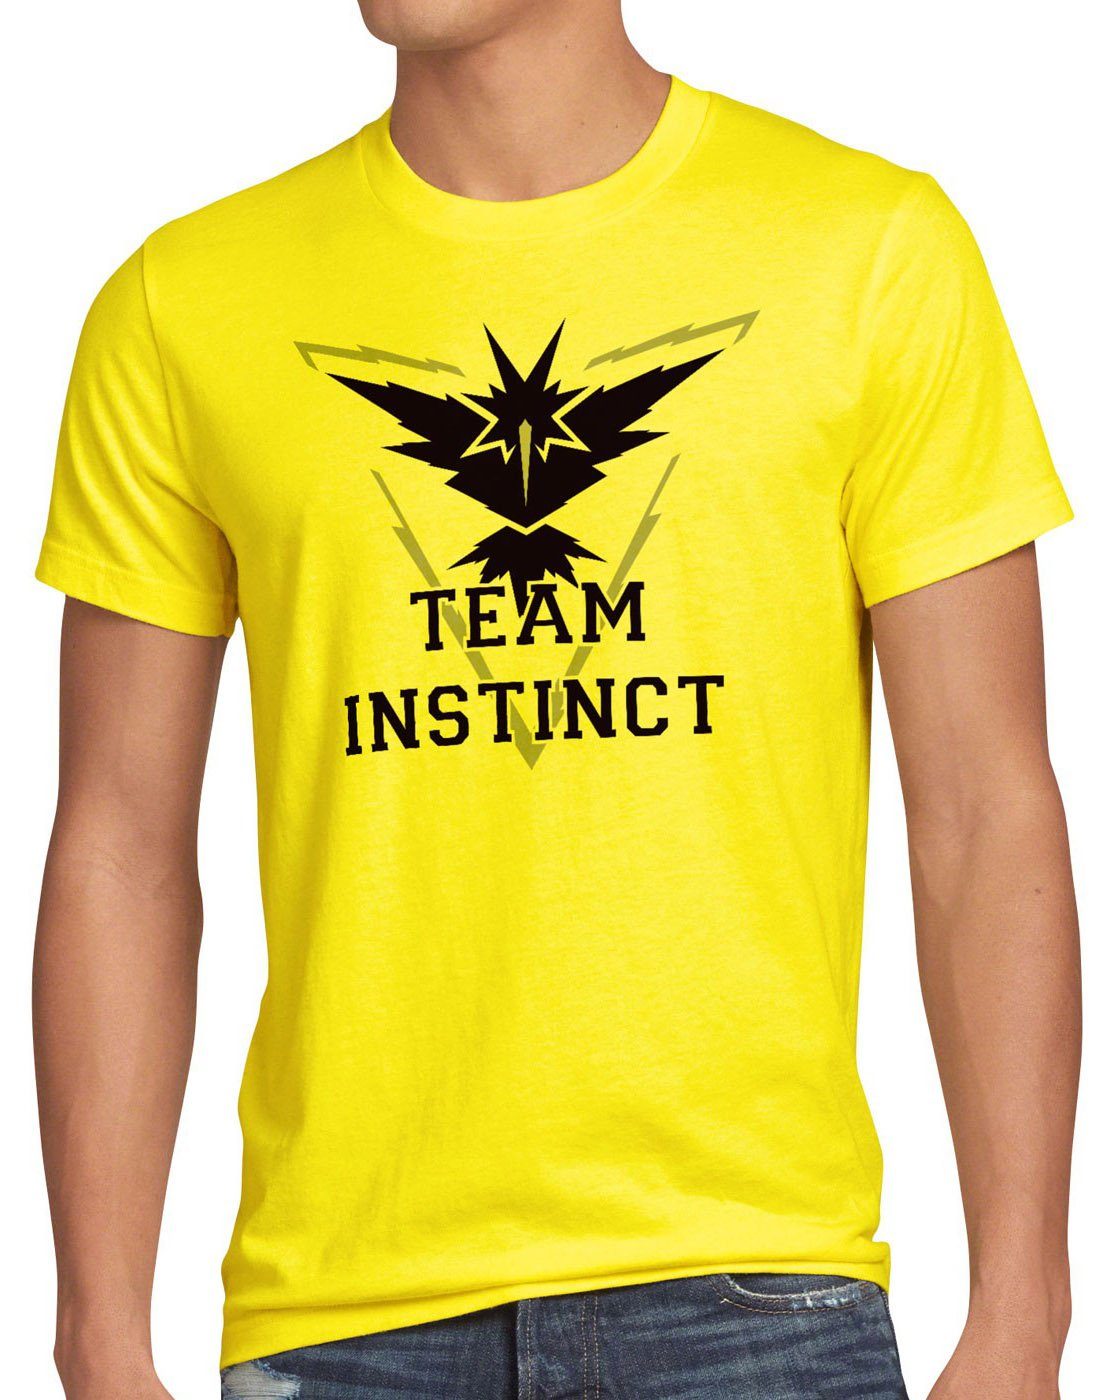 style3 Print-Shirt Herren T-Shirt Team Instinct gelb instinkt intuition boy poeball poke arena game